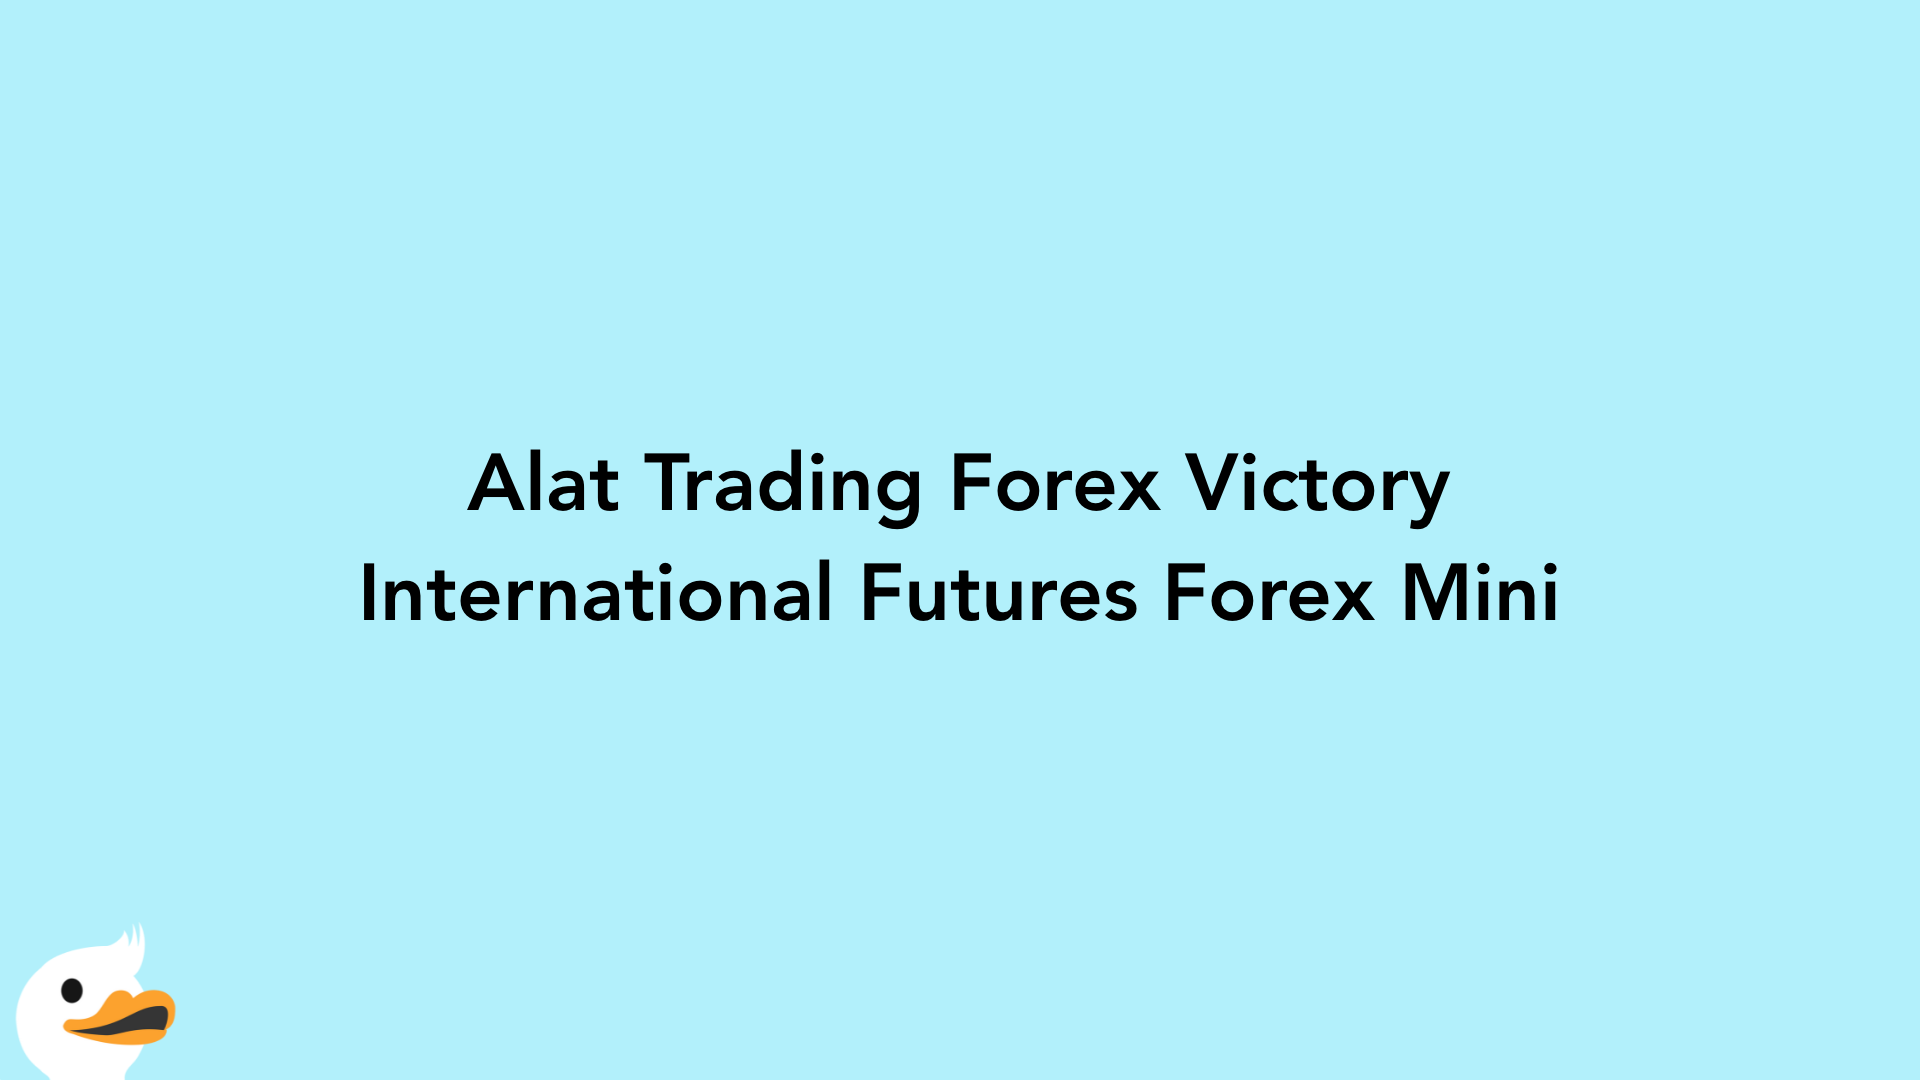 Alat Trading Forex Victory International Futures Forex Mini